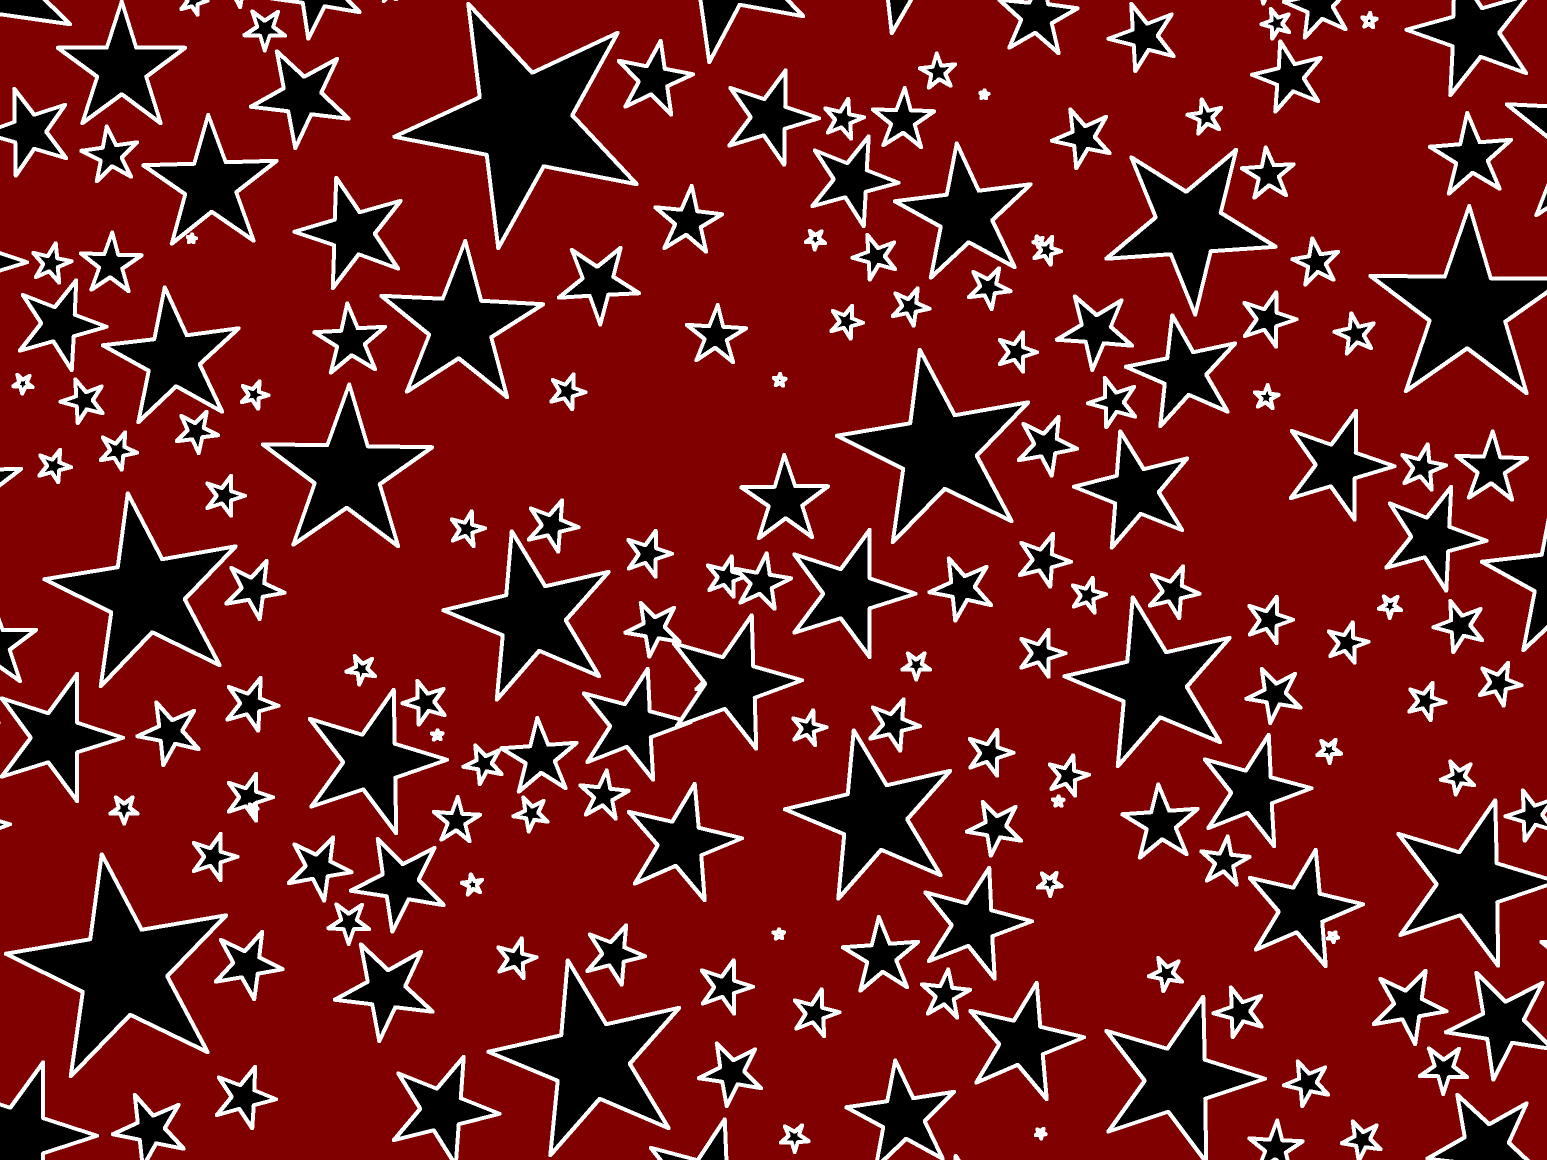 Red and Black Star Wallpaper by bjstar on DeviantArt